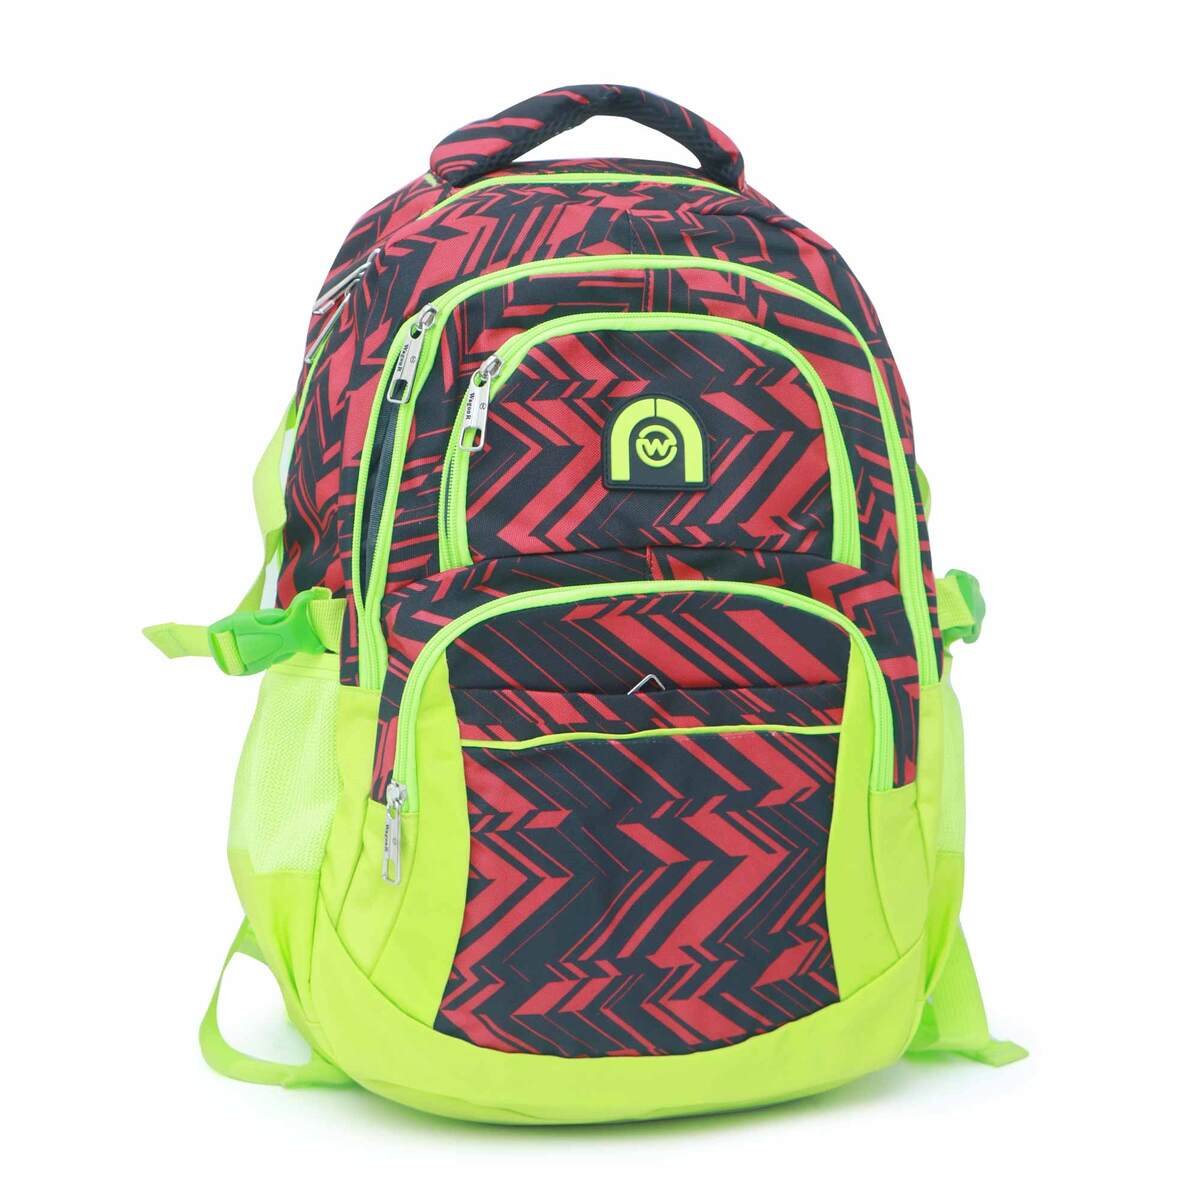 Wagon R Newstar School Backpack 18" KLT6669